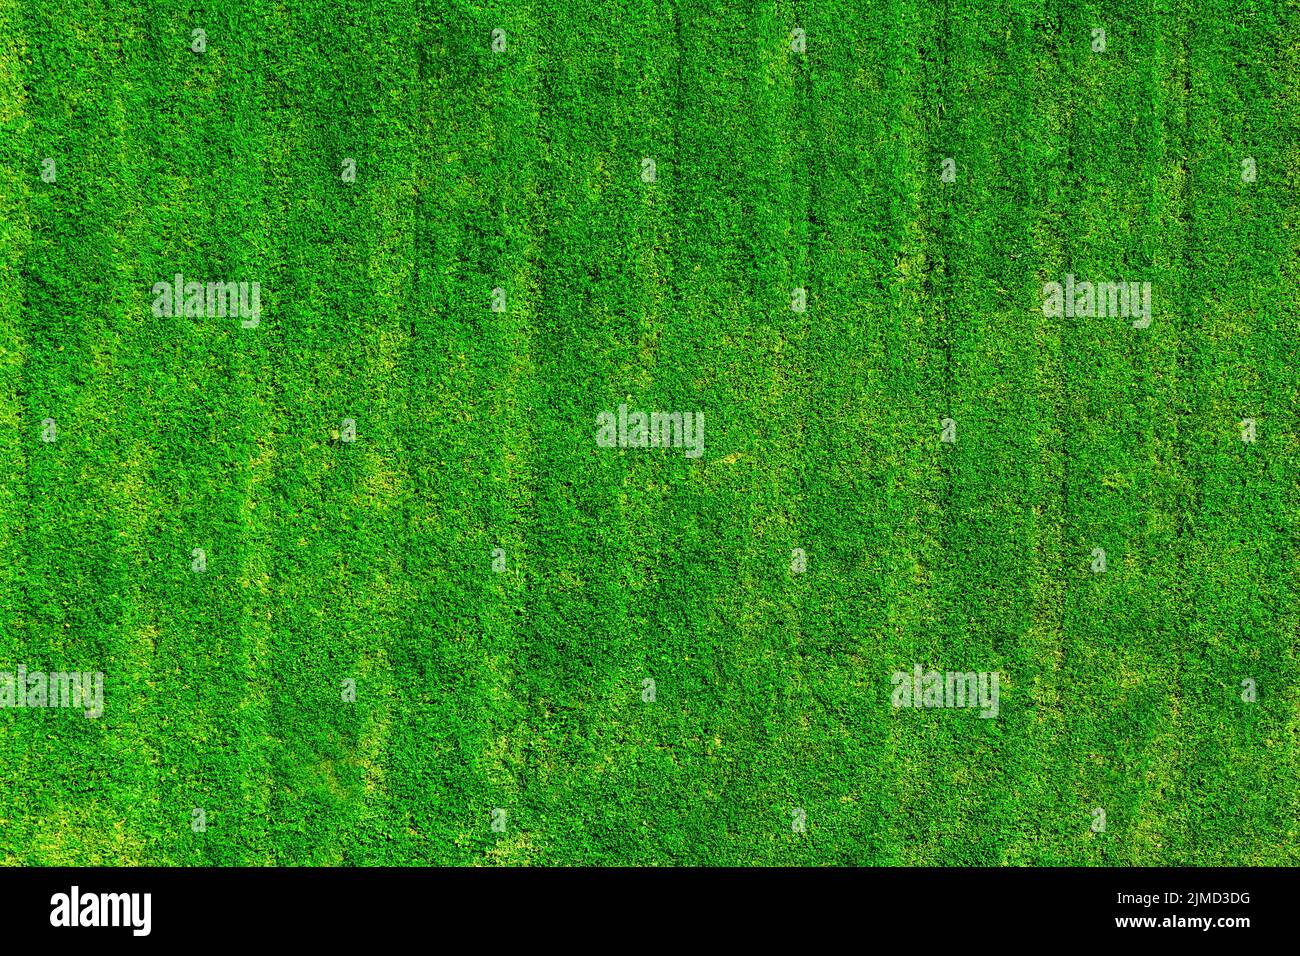 Green grass field background Stock Photo